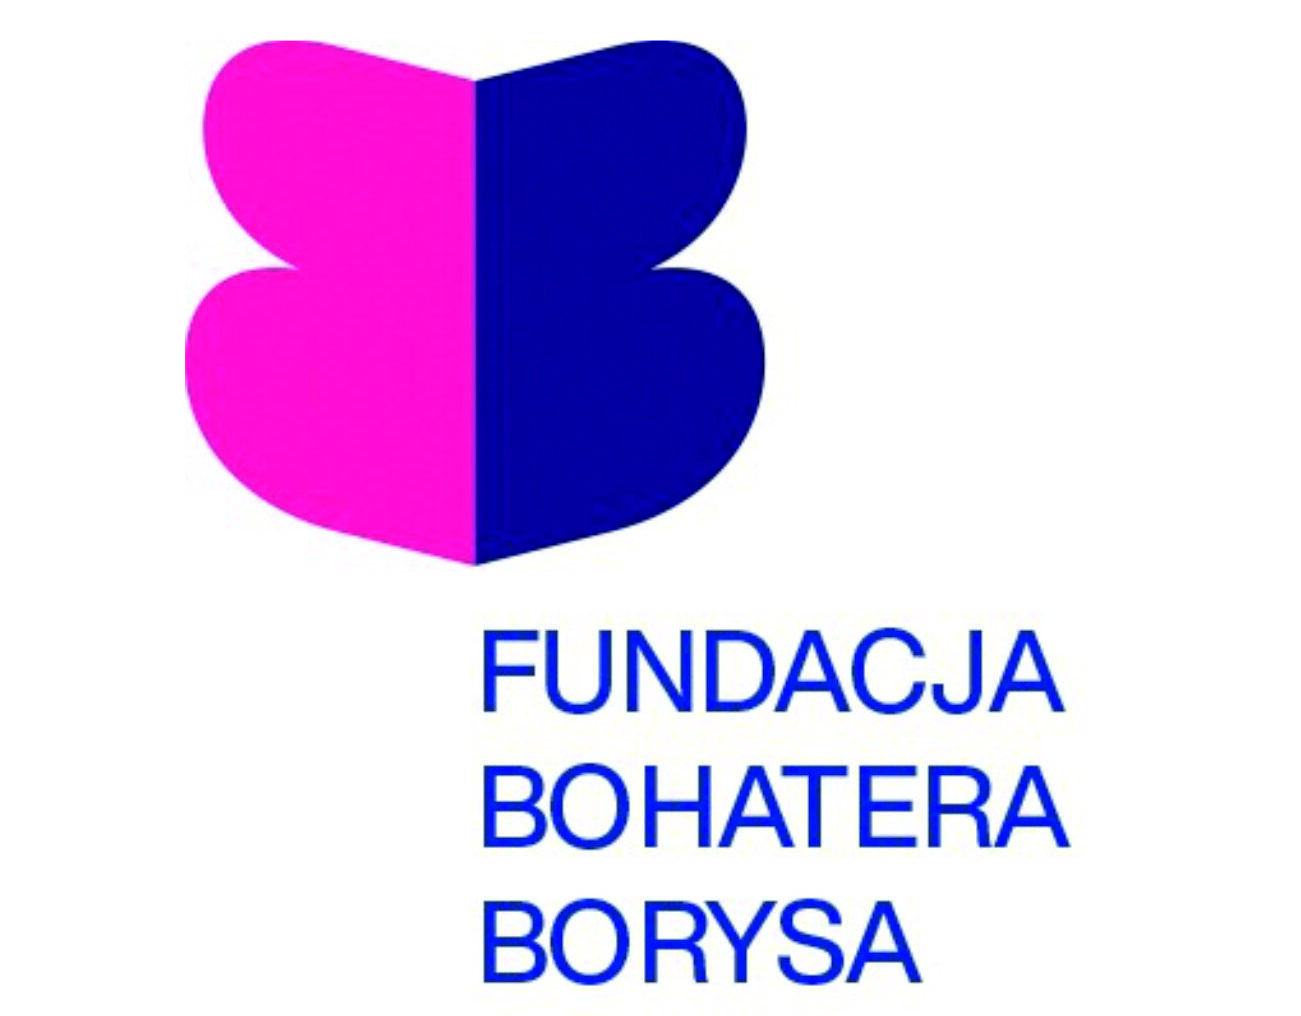 Fundacja Bohatera Borysa